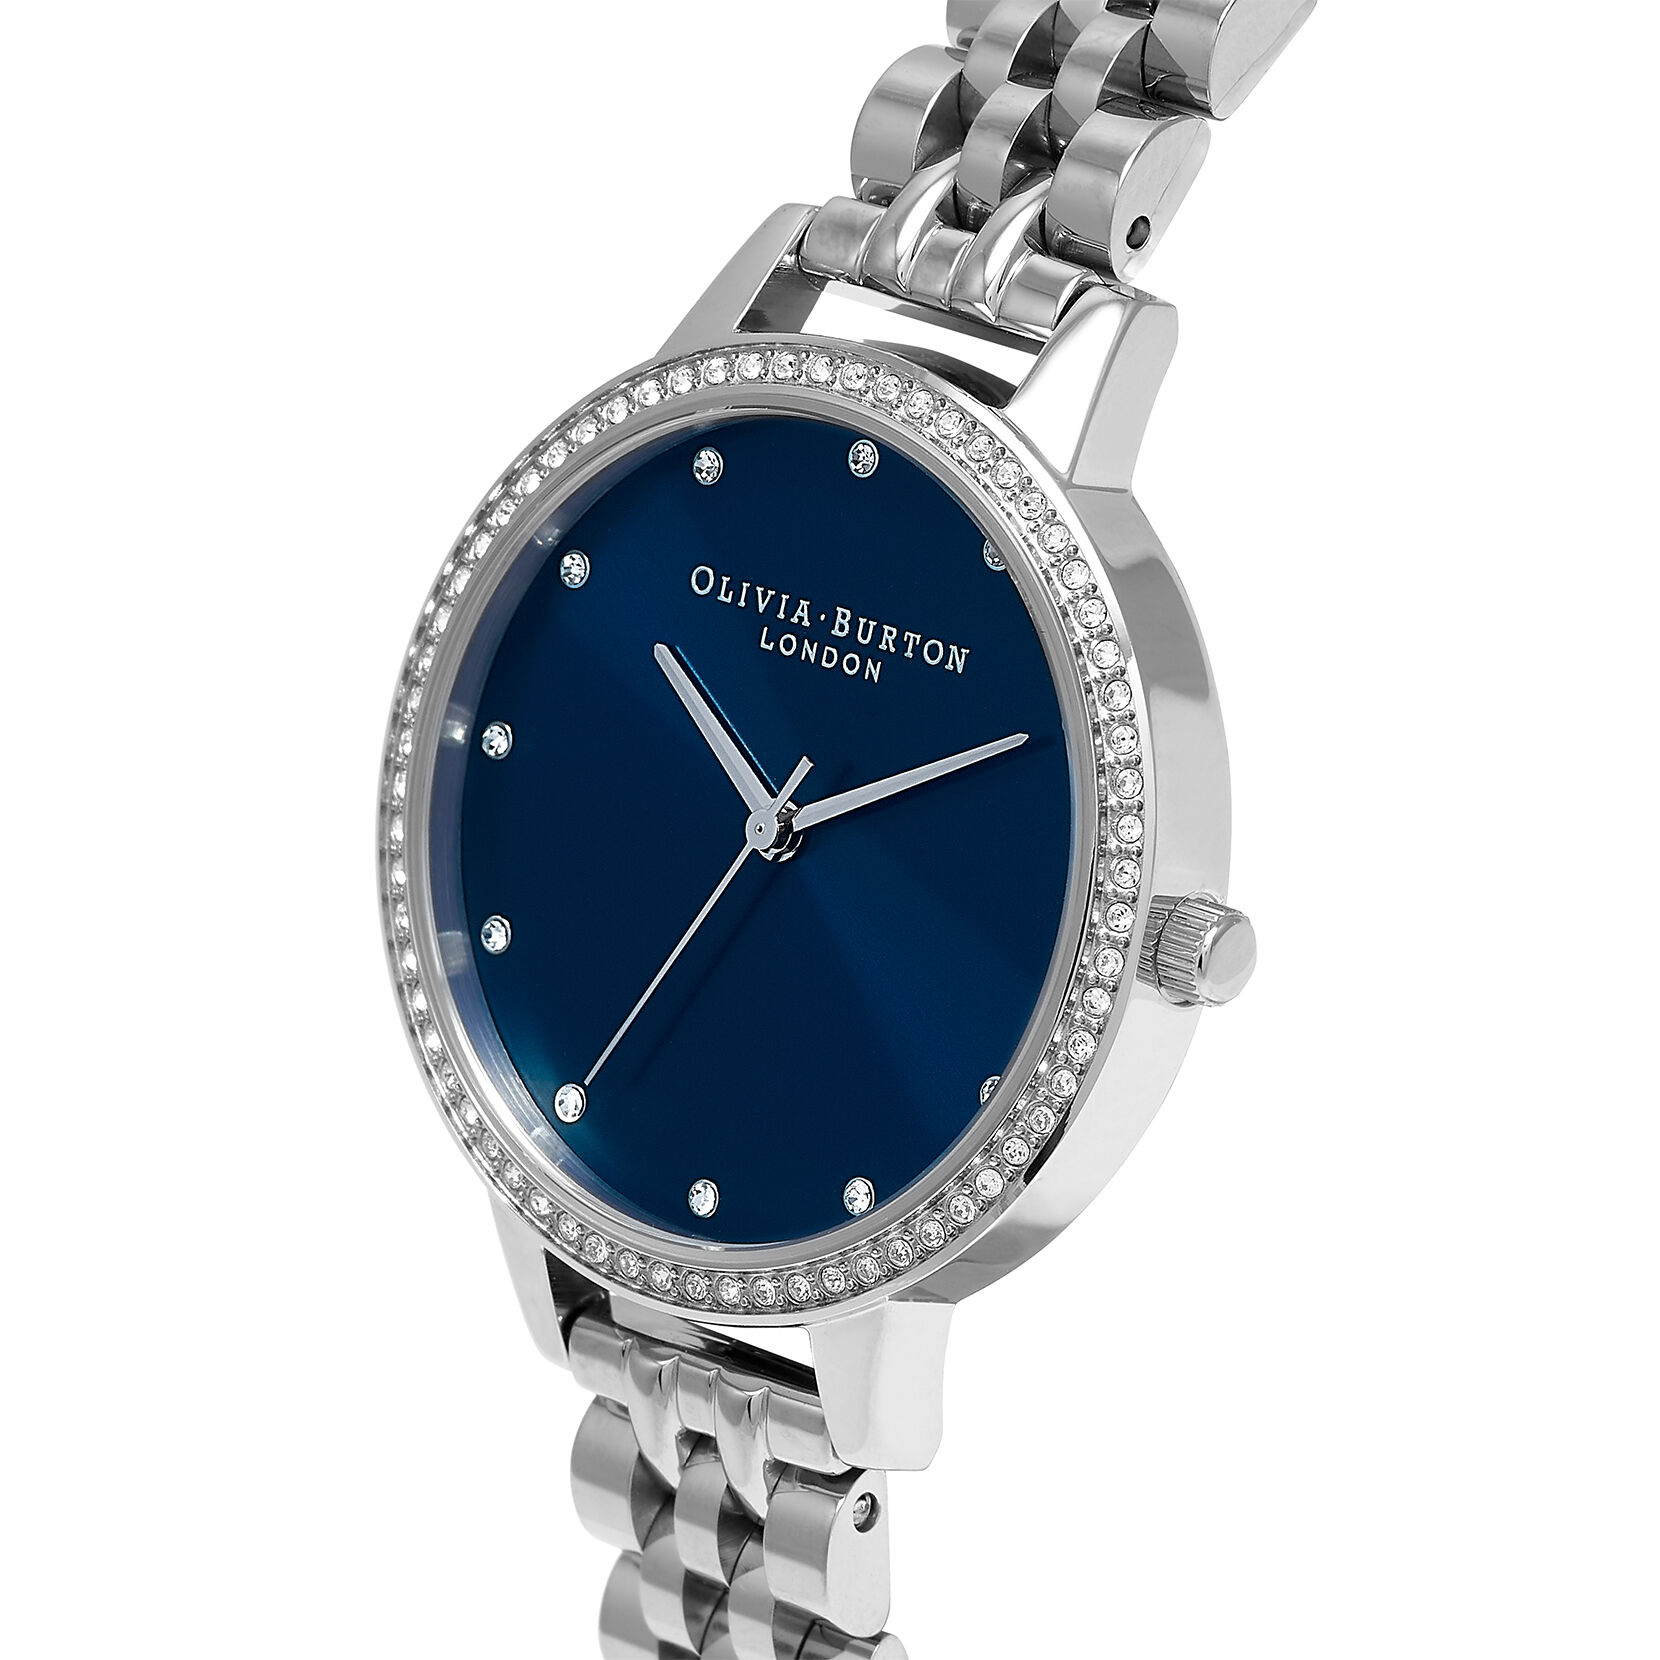 Classics 34mm Midnight Blue & Silver Bracelet Watch